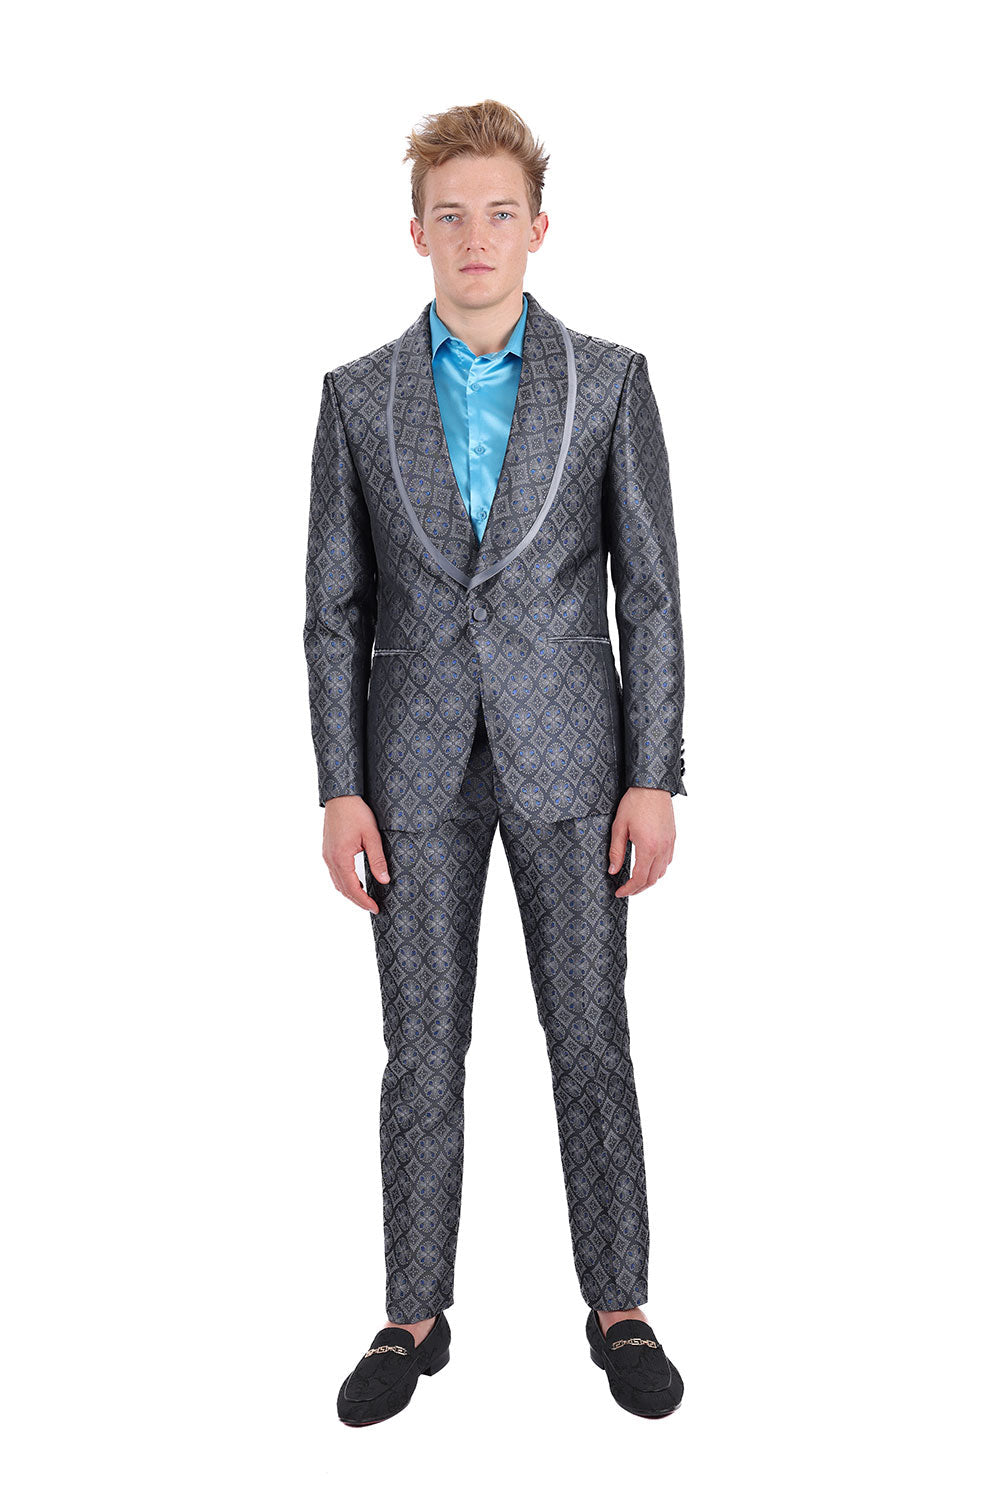 BARABAS Men's Premium Geometric Shawl Blazer 3BL05 Gray